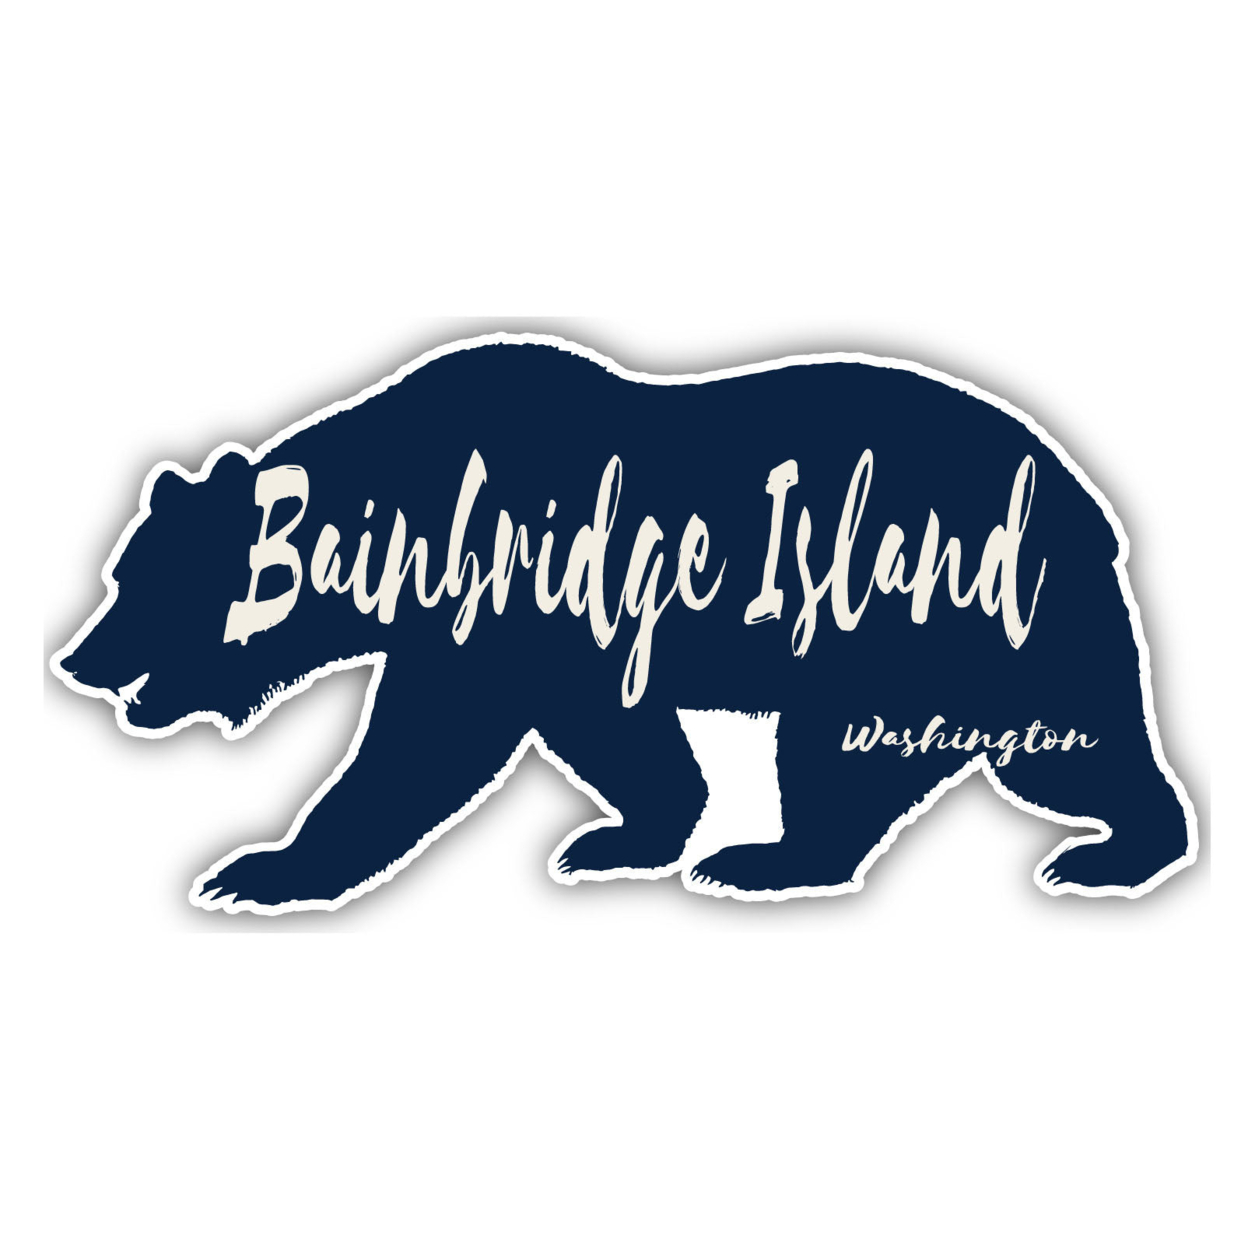 Bainbridge Island Washington Souvenir Decorative Stickers (Choose Theme And Size) - 4-Pack, 2-Inch, Tent